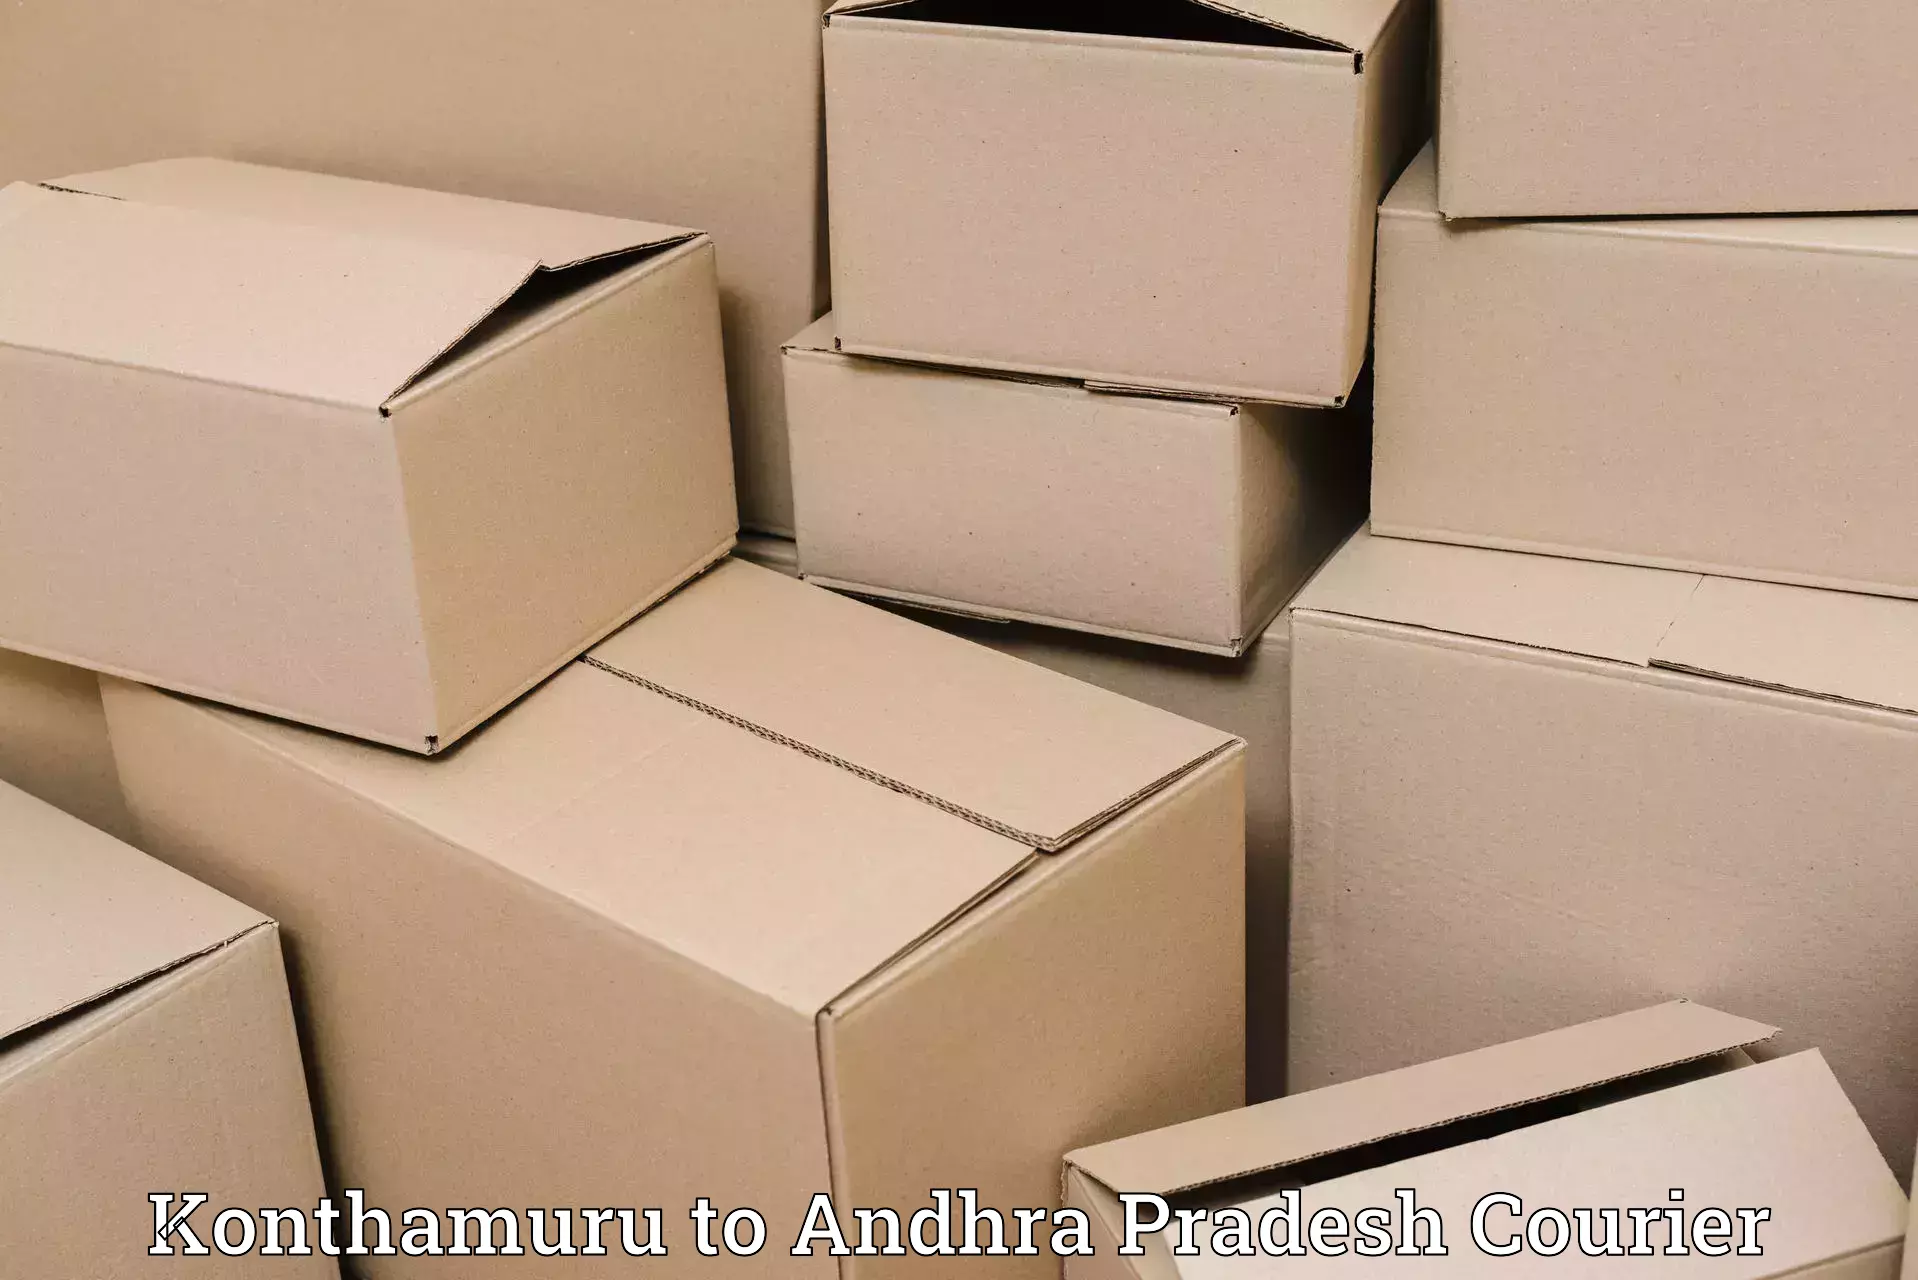 Courier service innovation Konthamuru to Rajahmundry